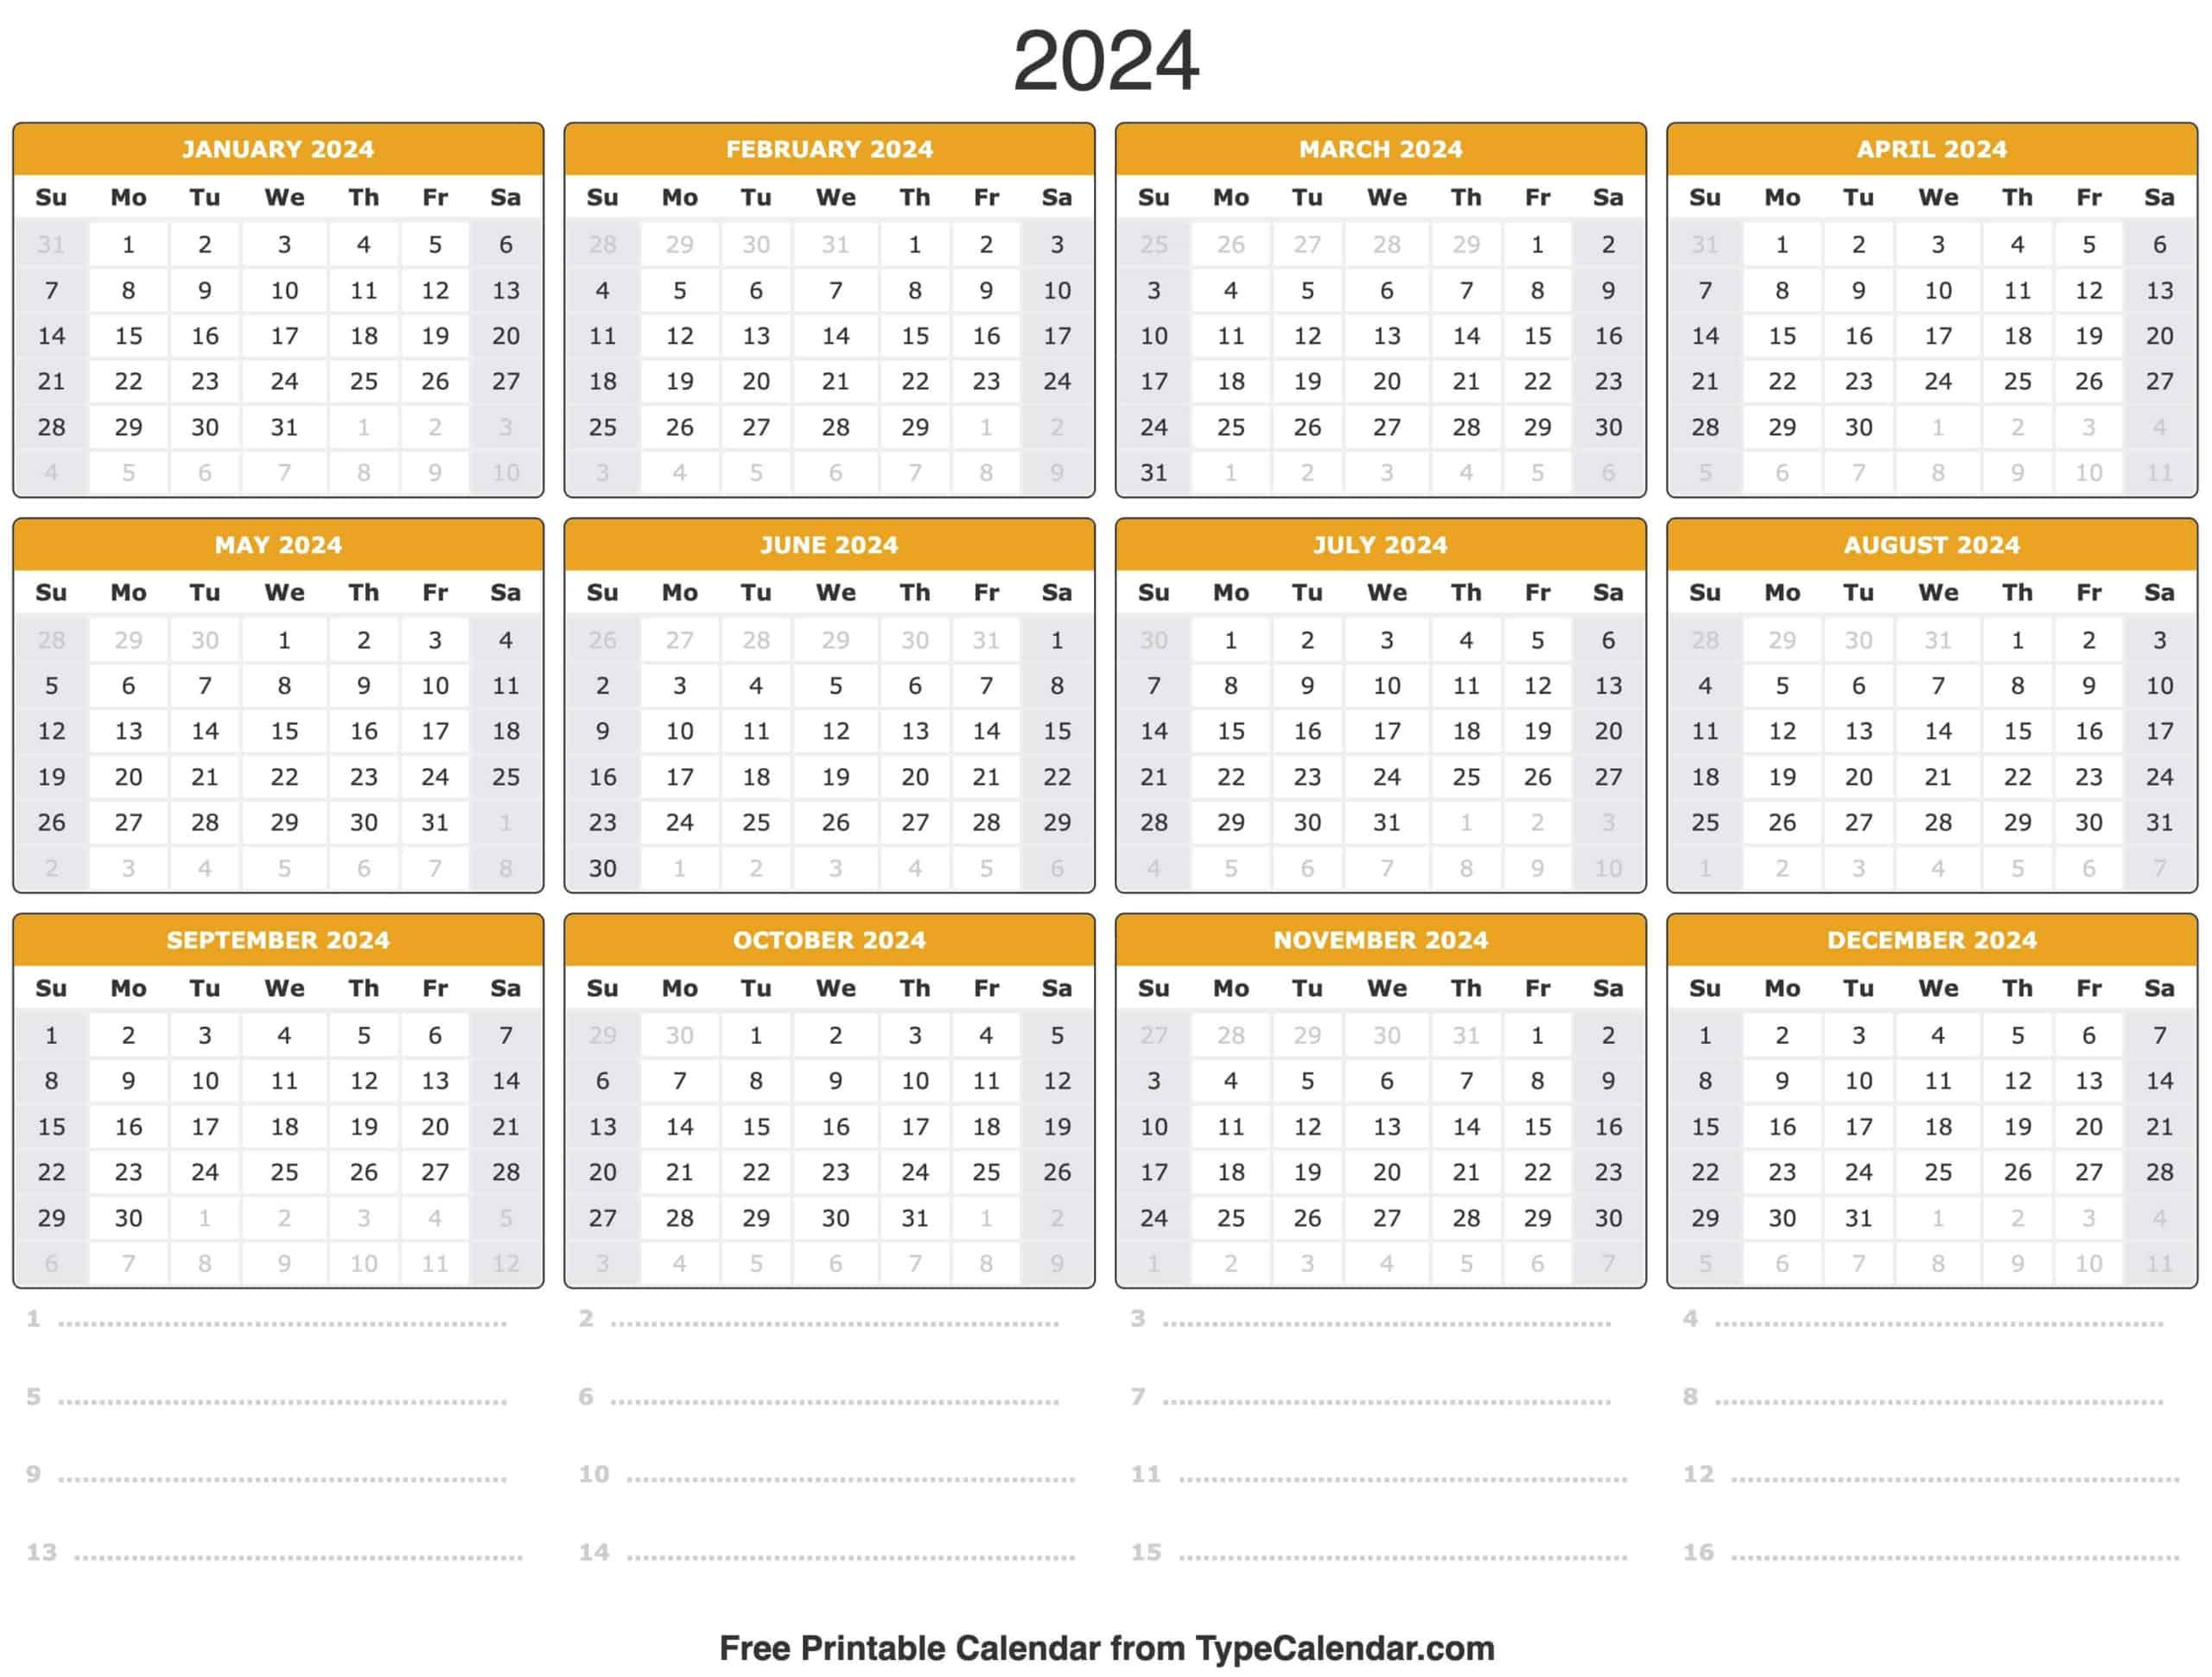 2024 Calendar: Free Printable Calendar With Holidays | 2024 Year View Calendar Printable